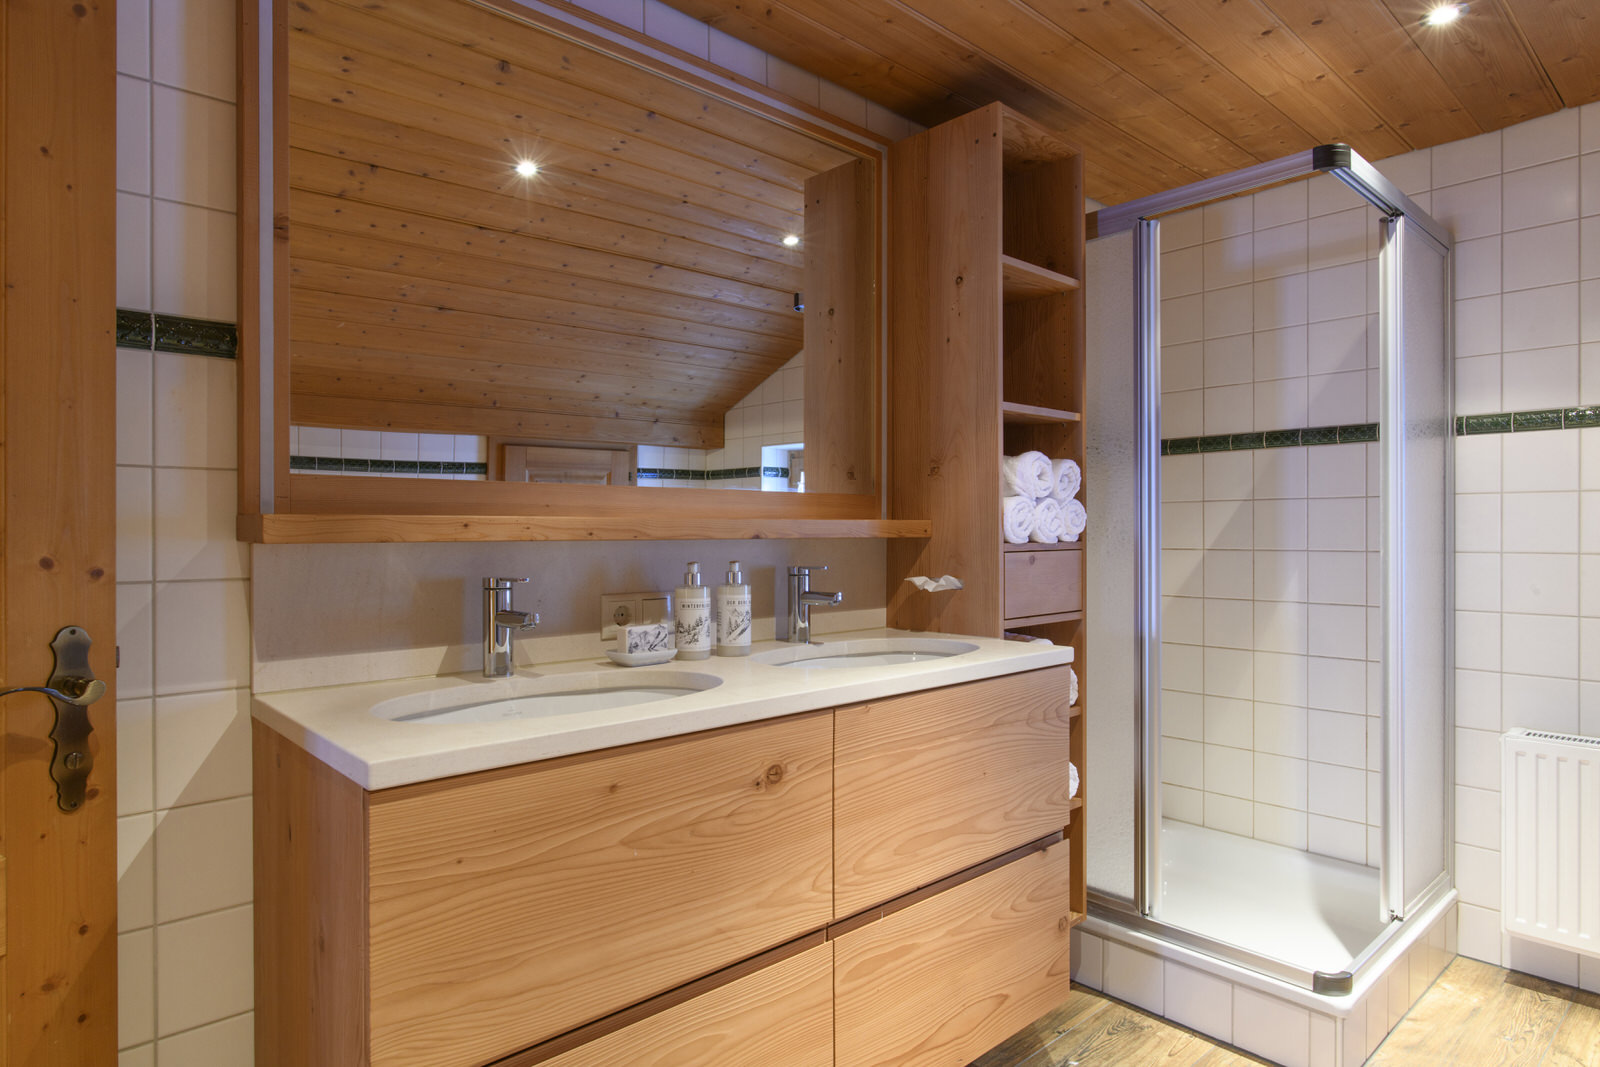 Bärenwald country lodge in the Montafon - bathroom